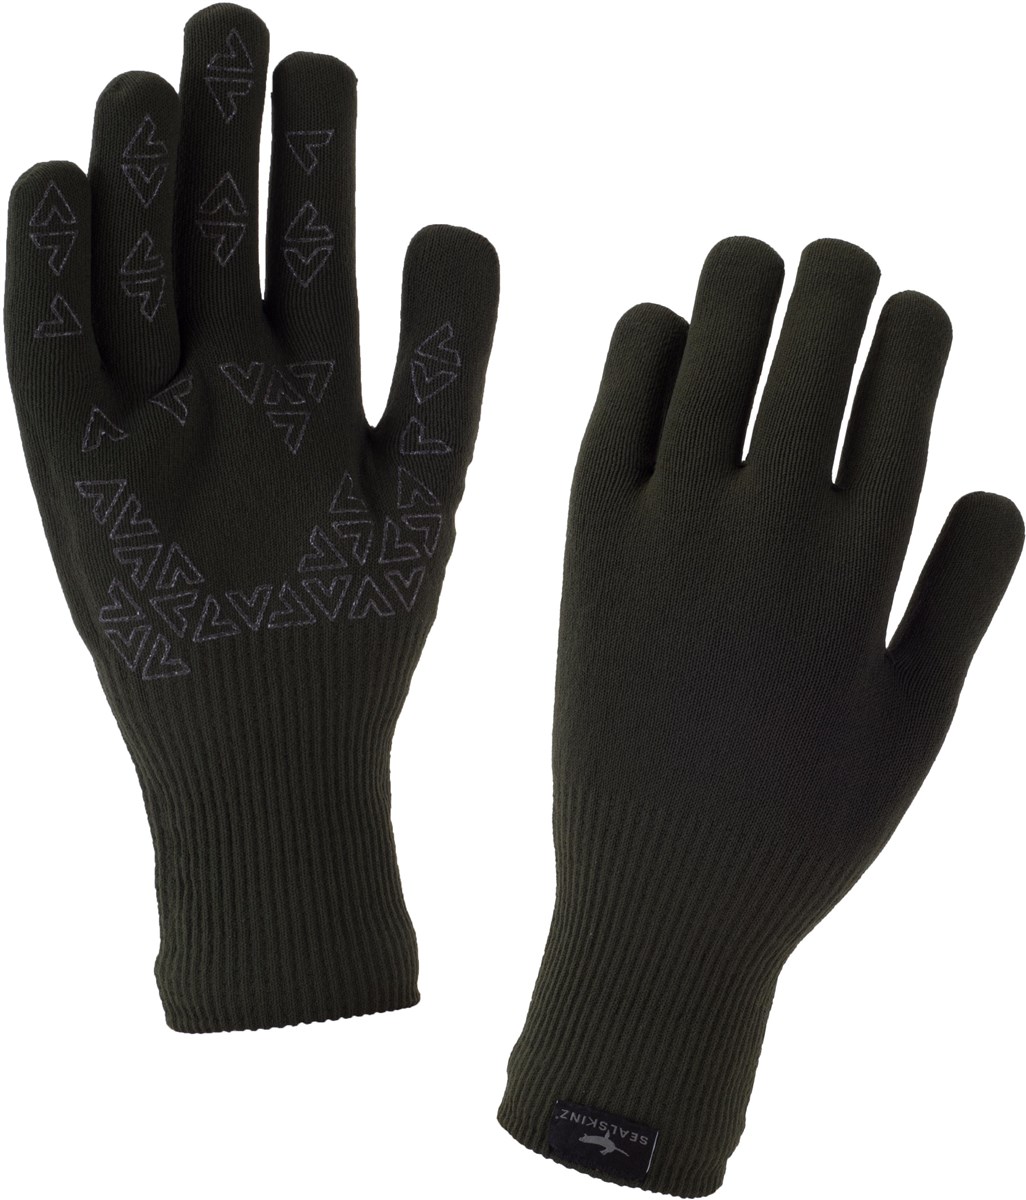 SealSkinz Outdoor Long Finger Gloves